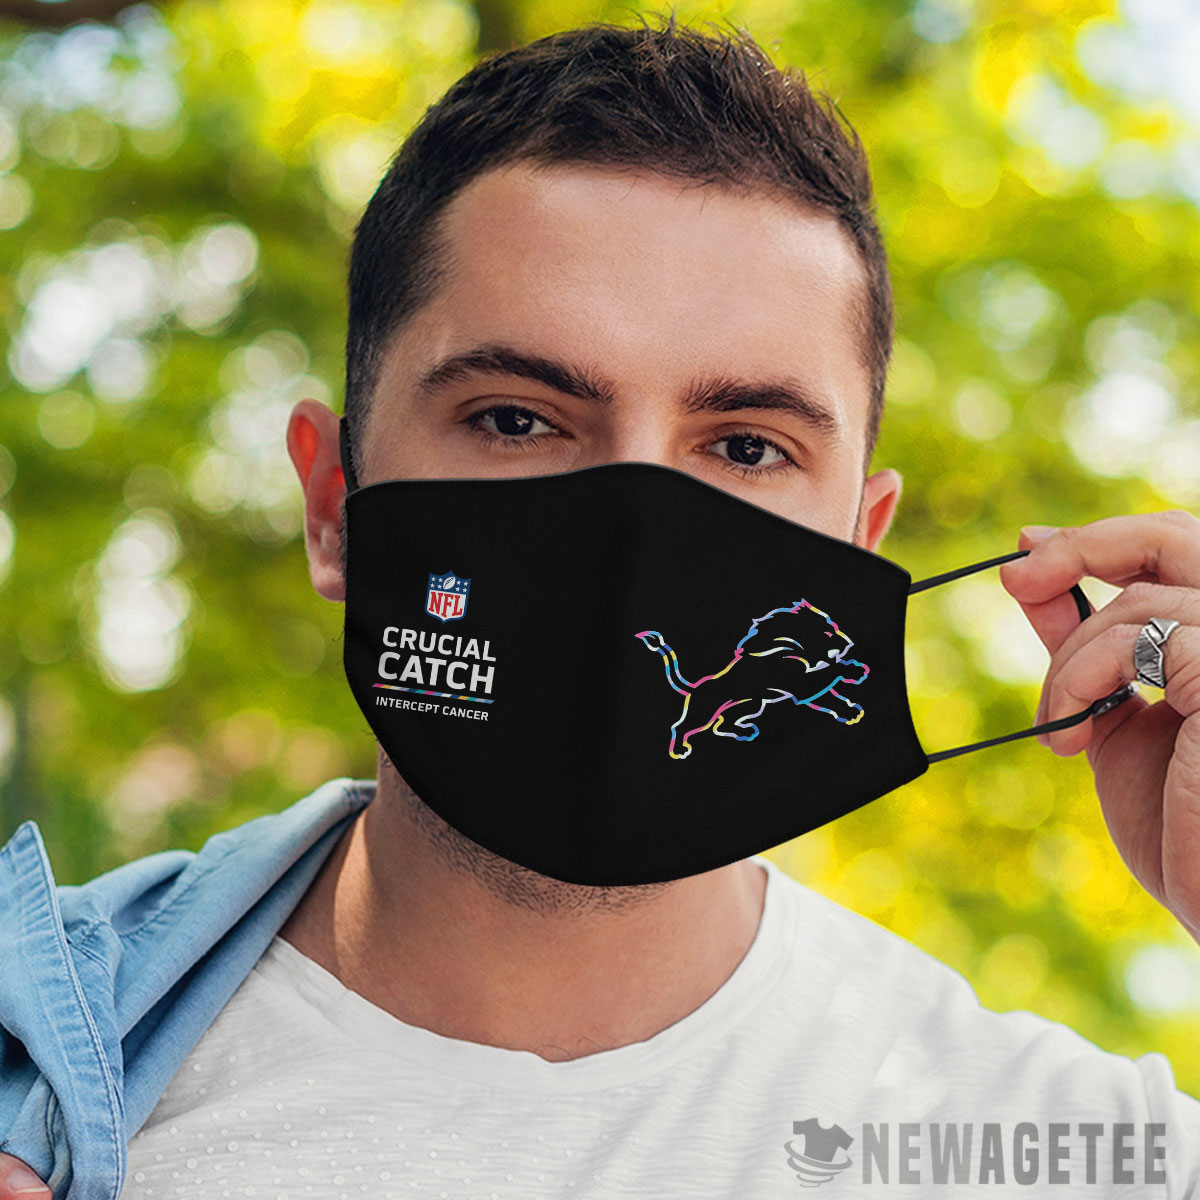 Detroit Lions Nfl Crucial Catch Multicolor Face Mask Anti-pollution